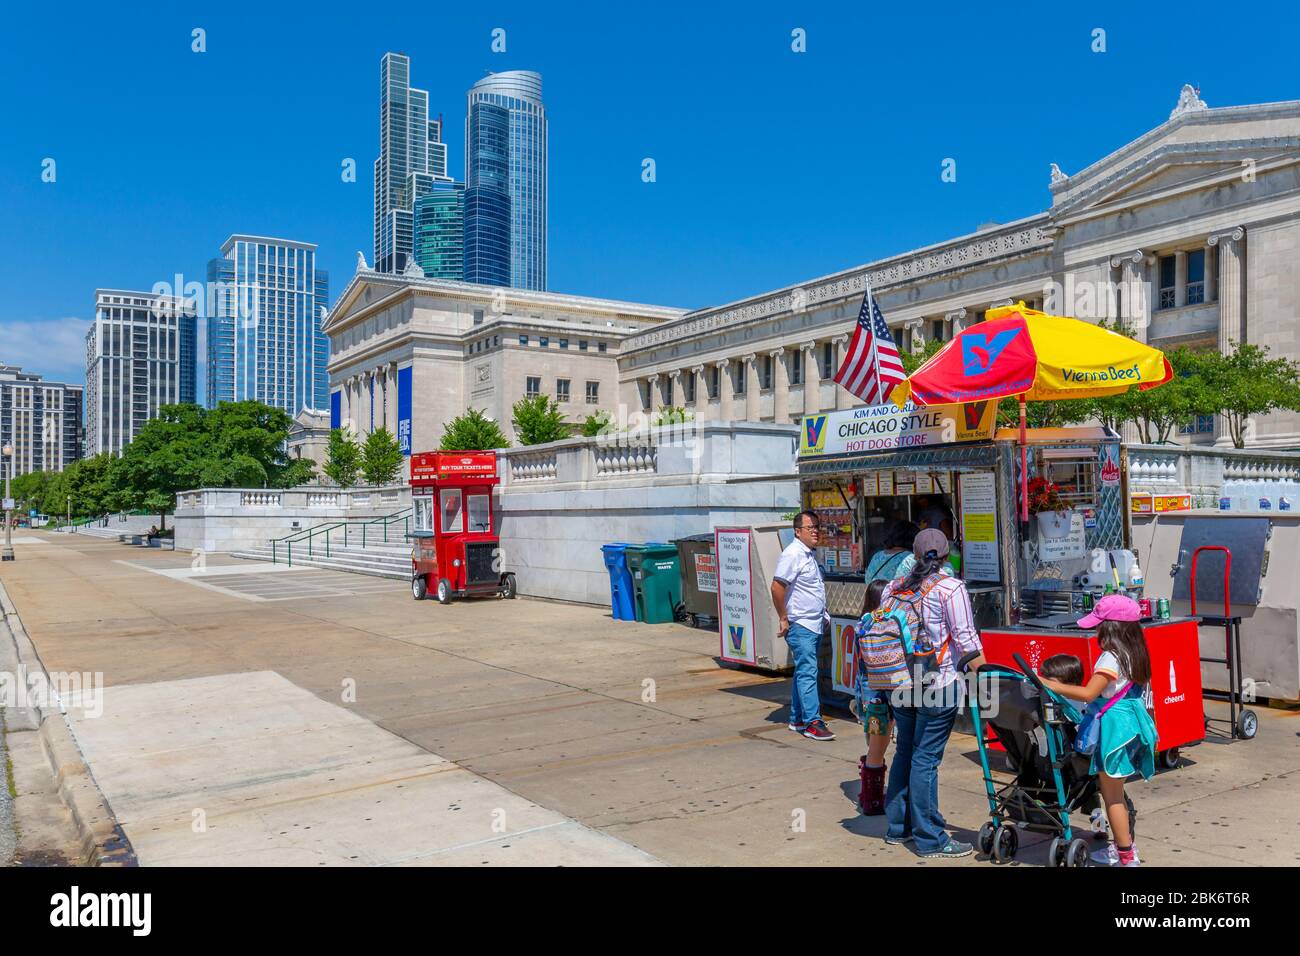 Blick auf das Field Museum State of the Art Science Museum und Hot Dog Stand, Chicago, Illinois, USA, Nordamerika Stockfoto